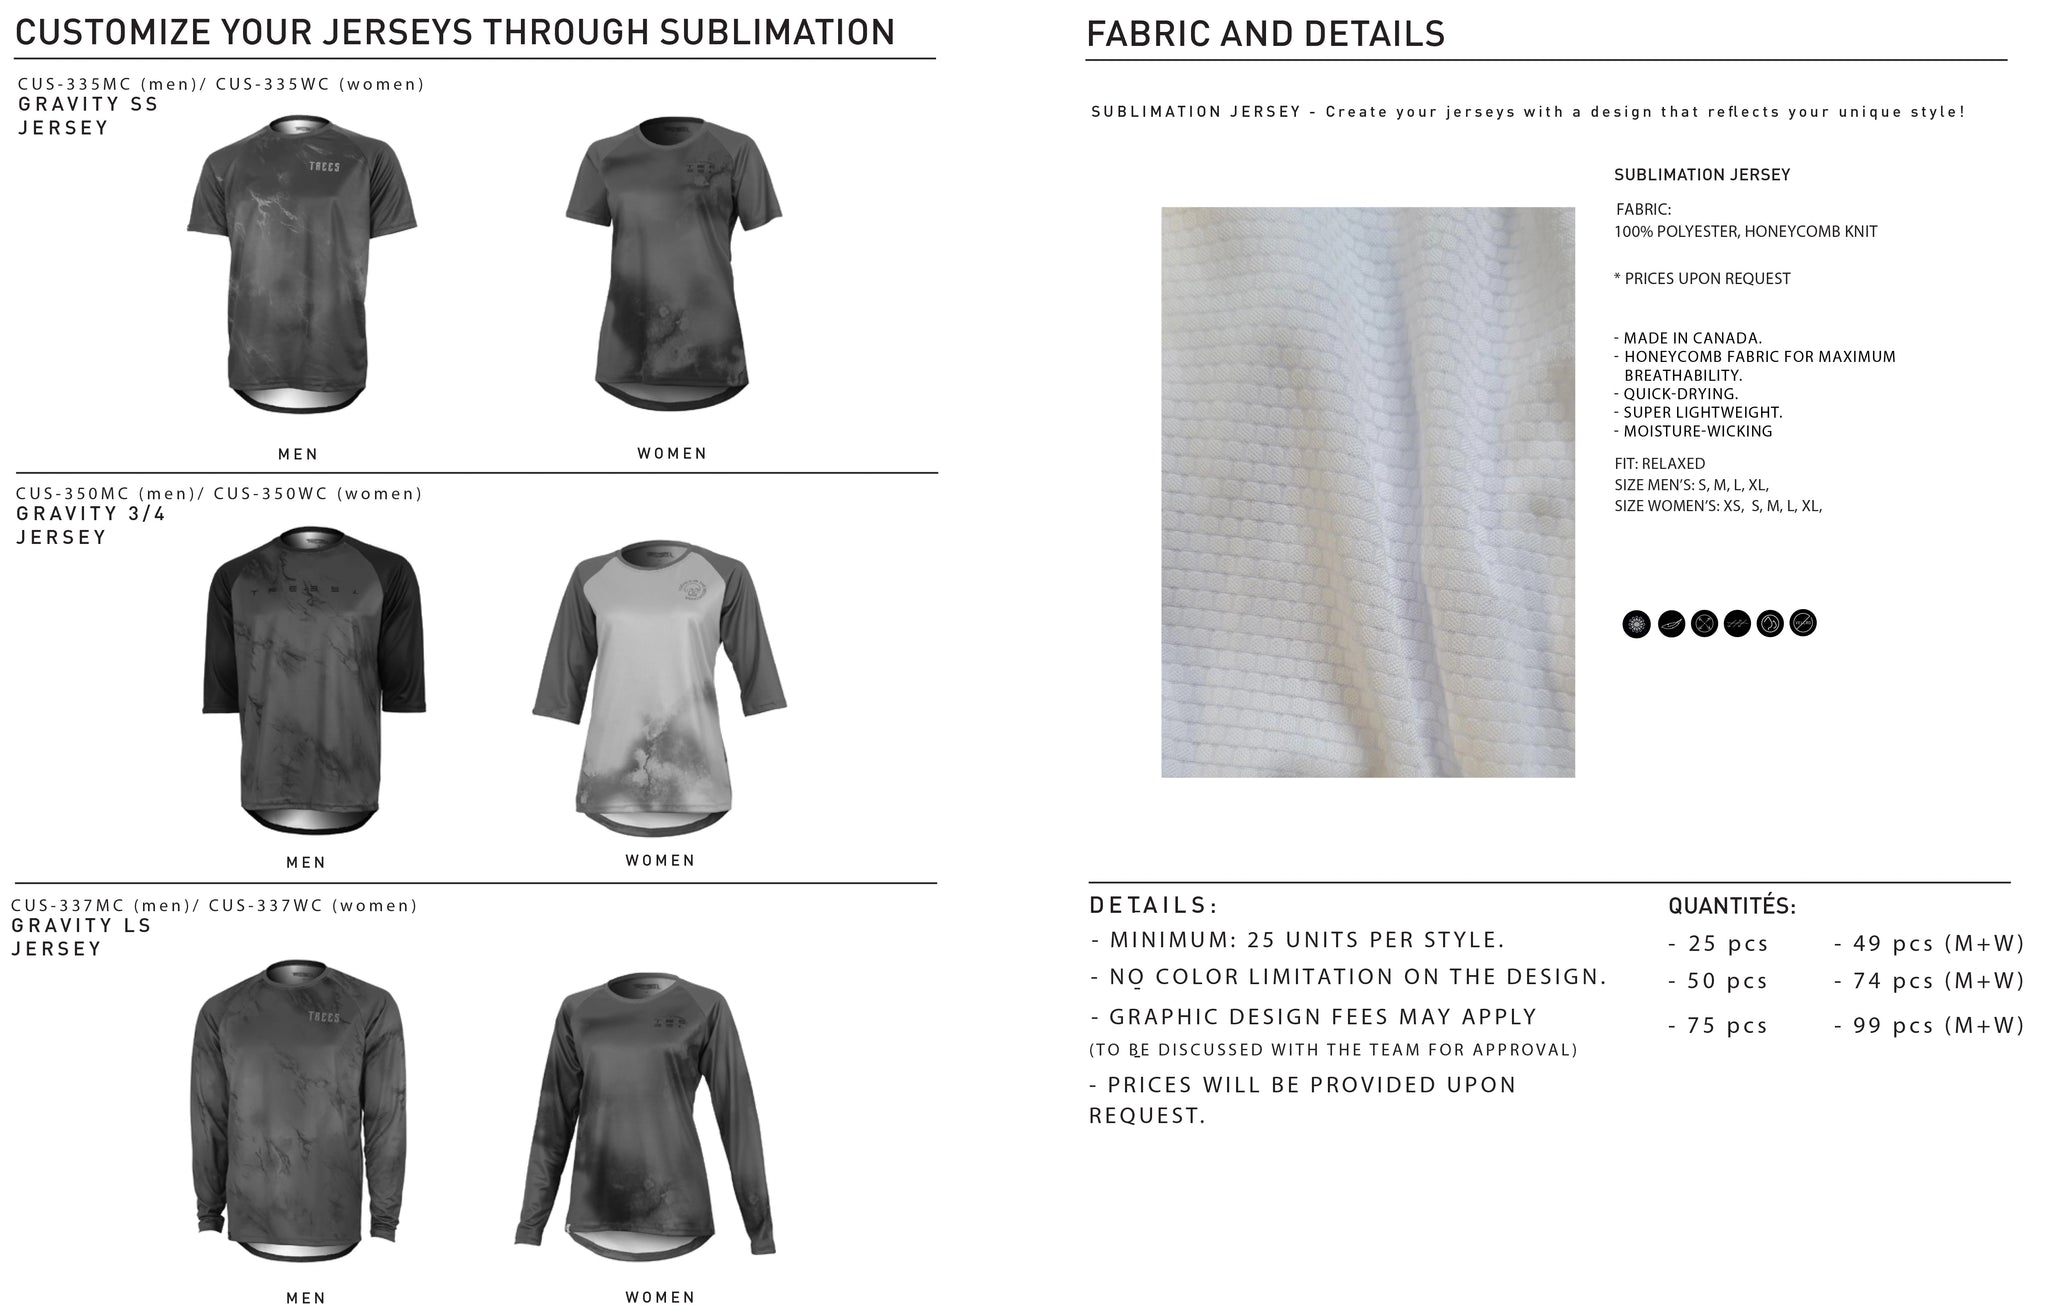 Custom Jersey - Customie your jerseys through sublimation - Build your own custom design